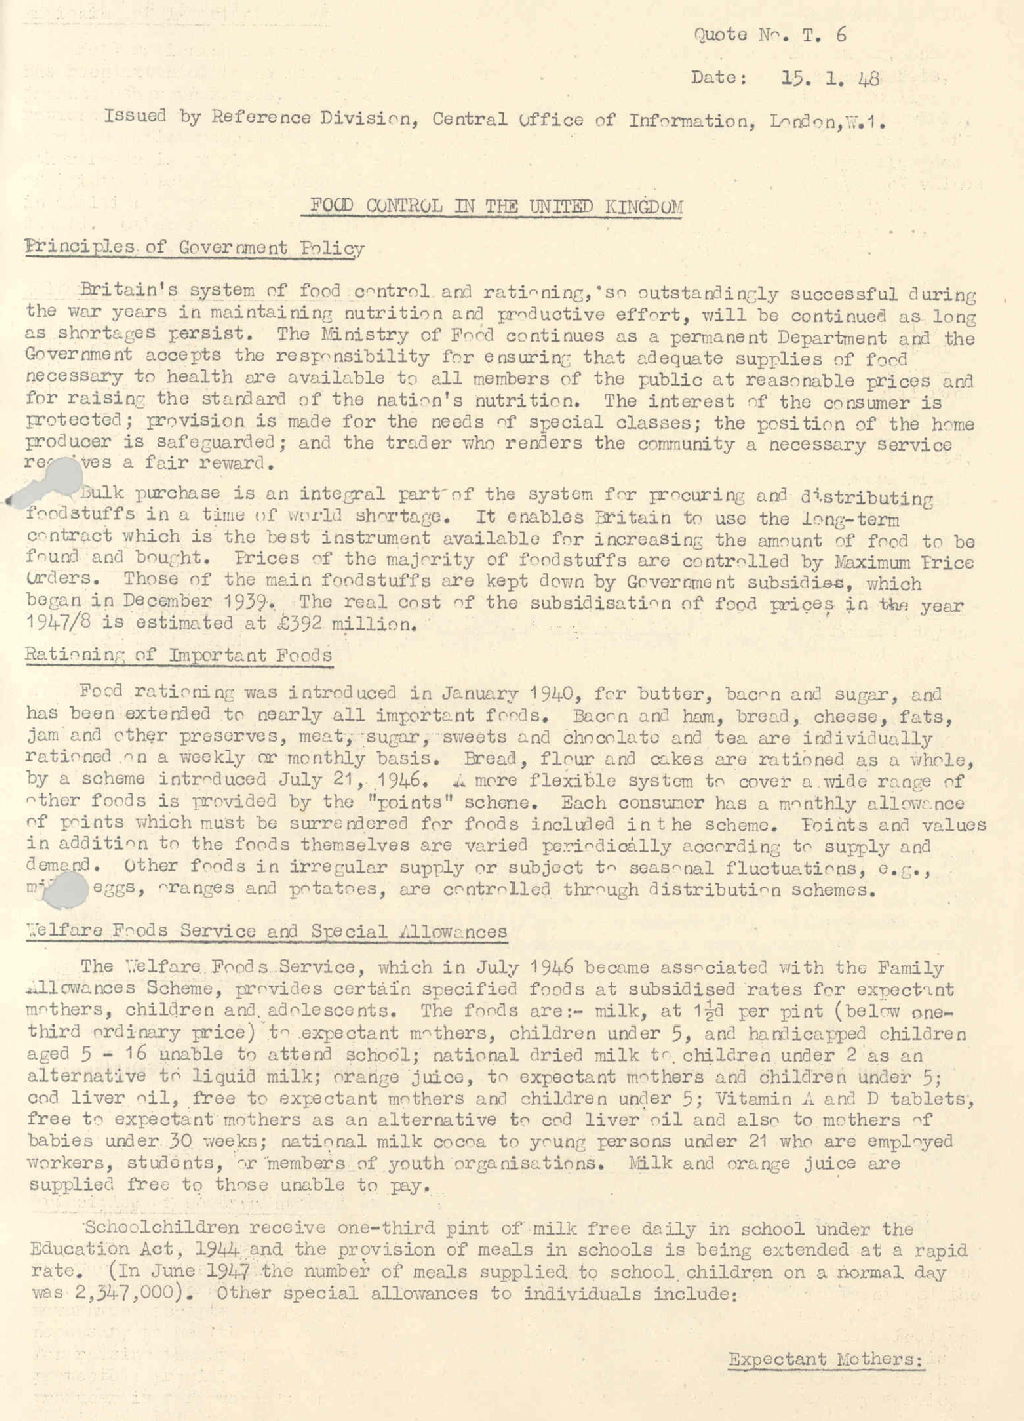 Post-war rationing, 1946 and 1948